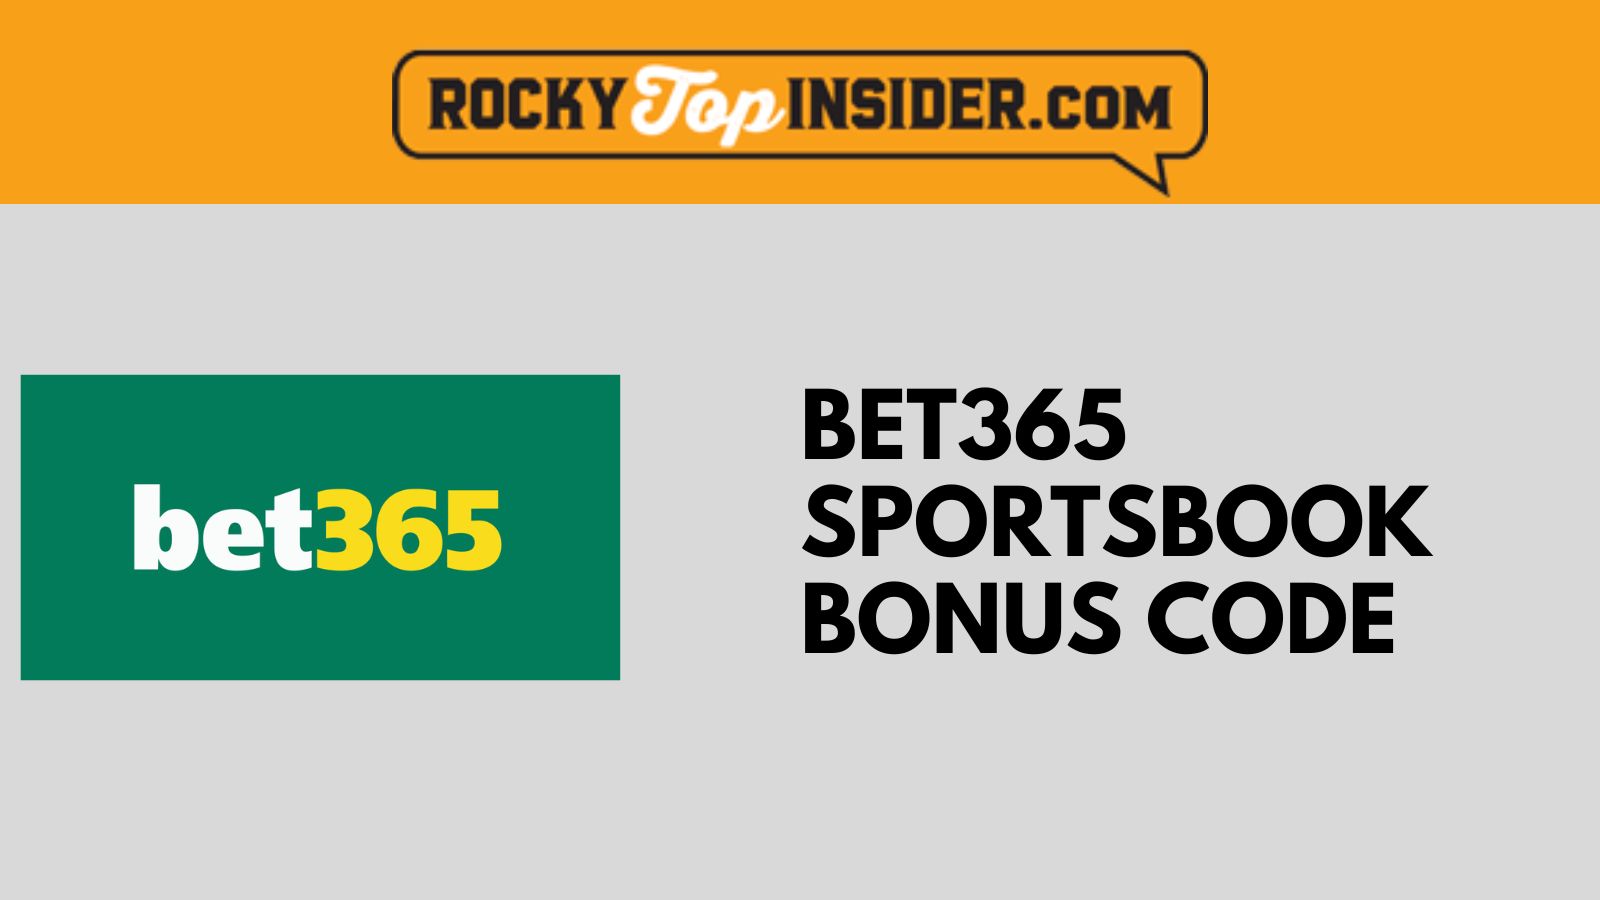 Bet365 bonus code AMNYXLM: Bet $1, get $200 bonus in NJ, VA, OH